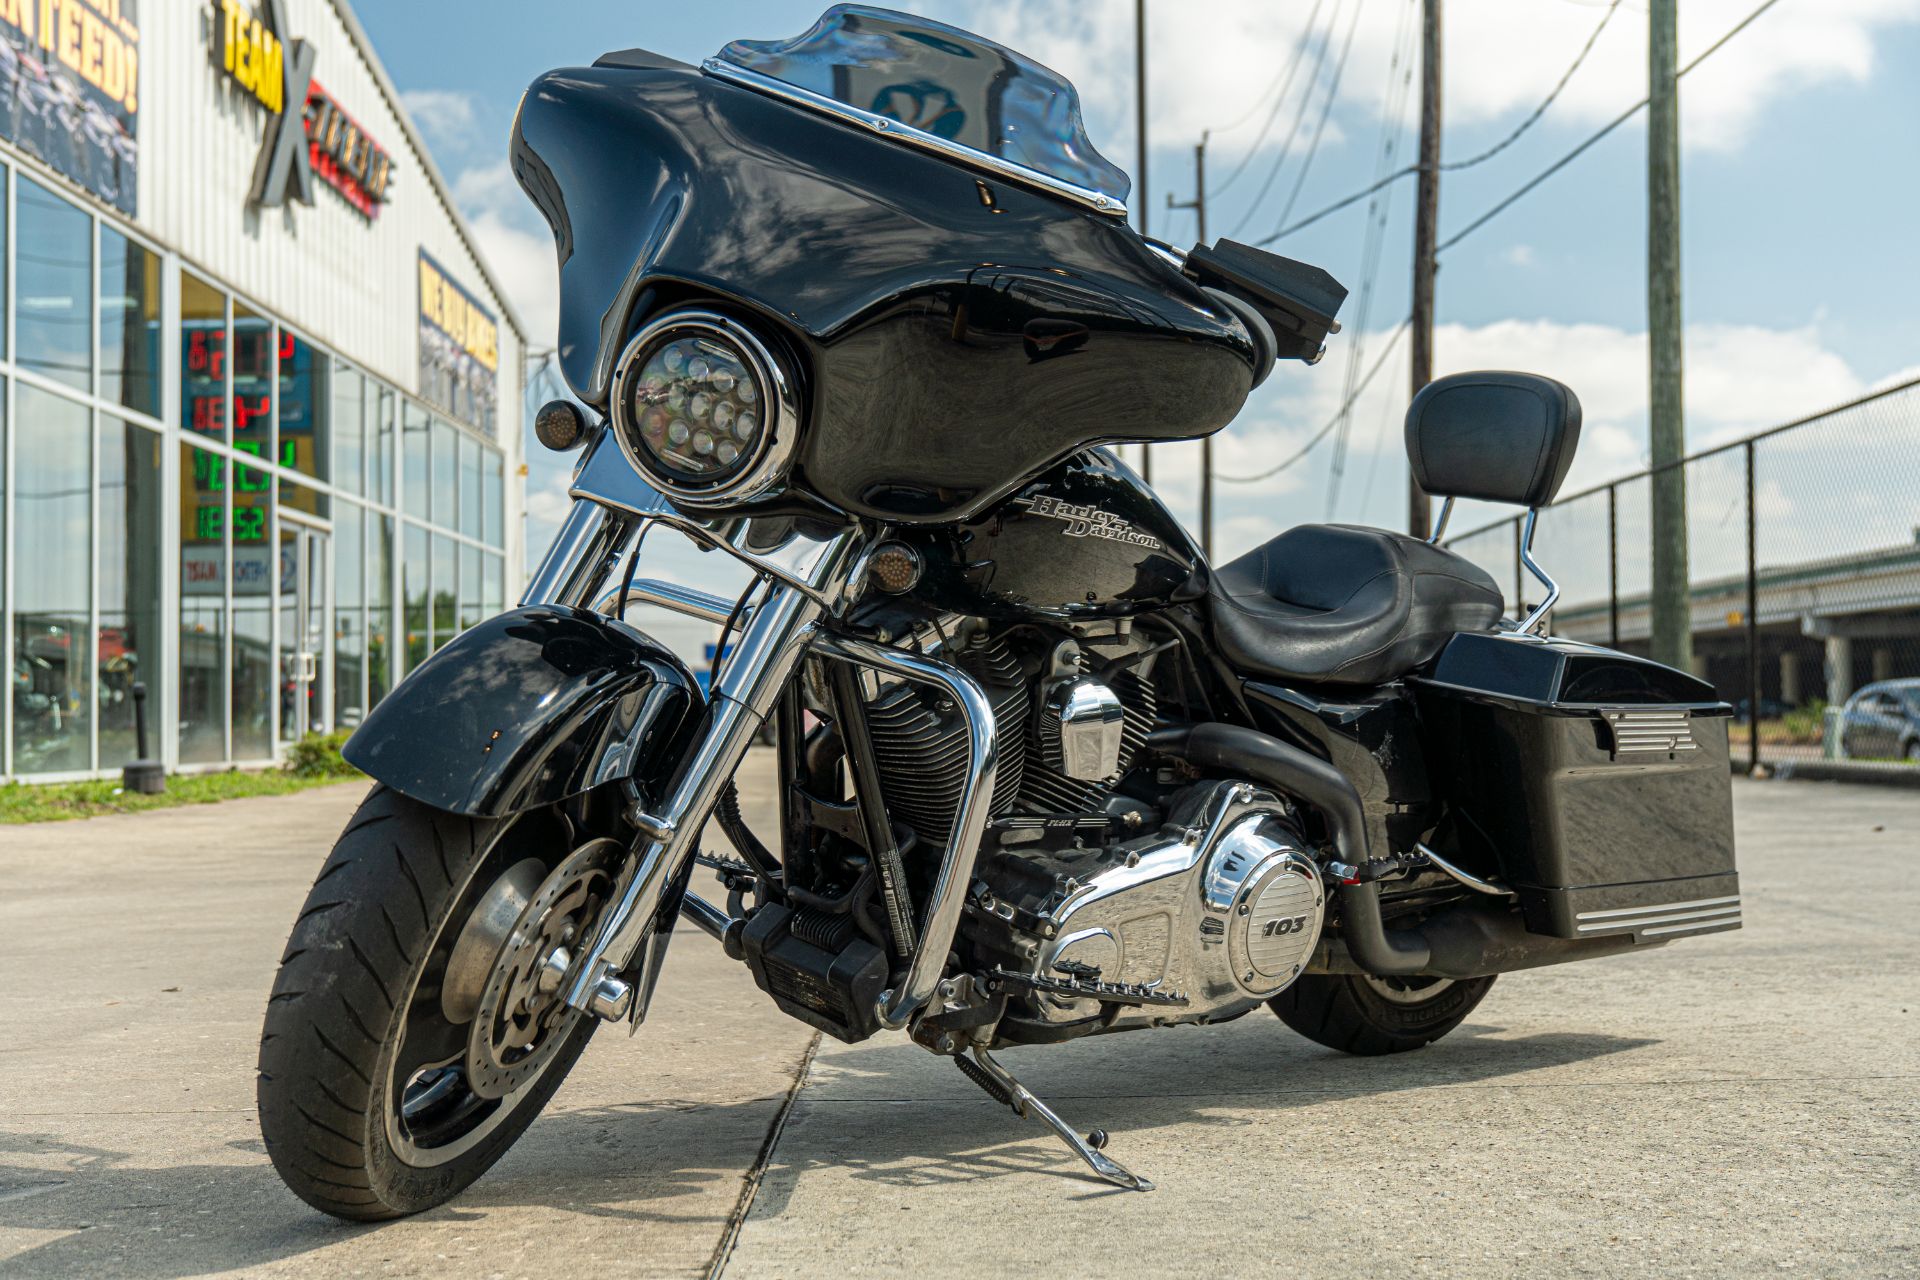 2013 Harley-Davidson Street Glide® in Houston, Texas - Photo 7